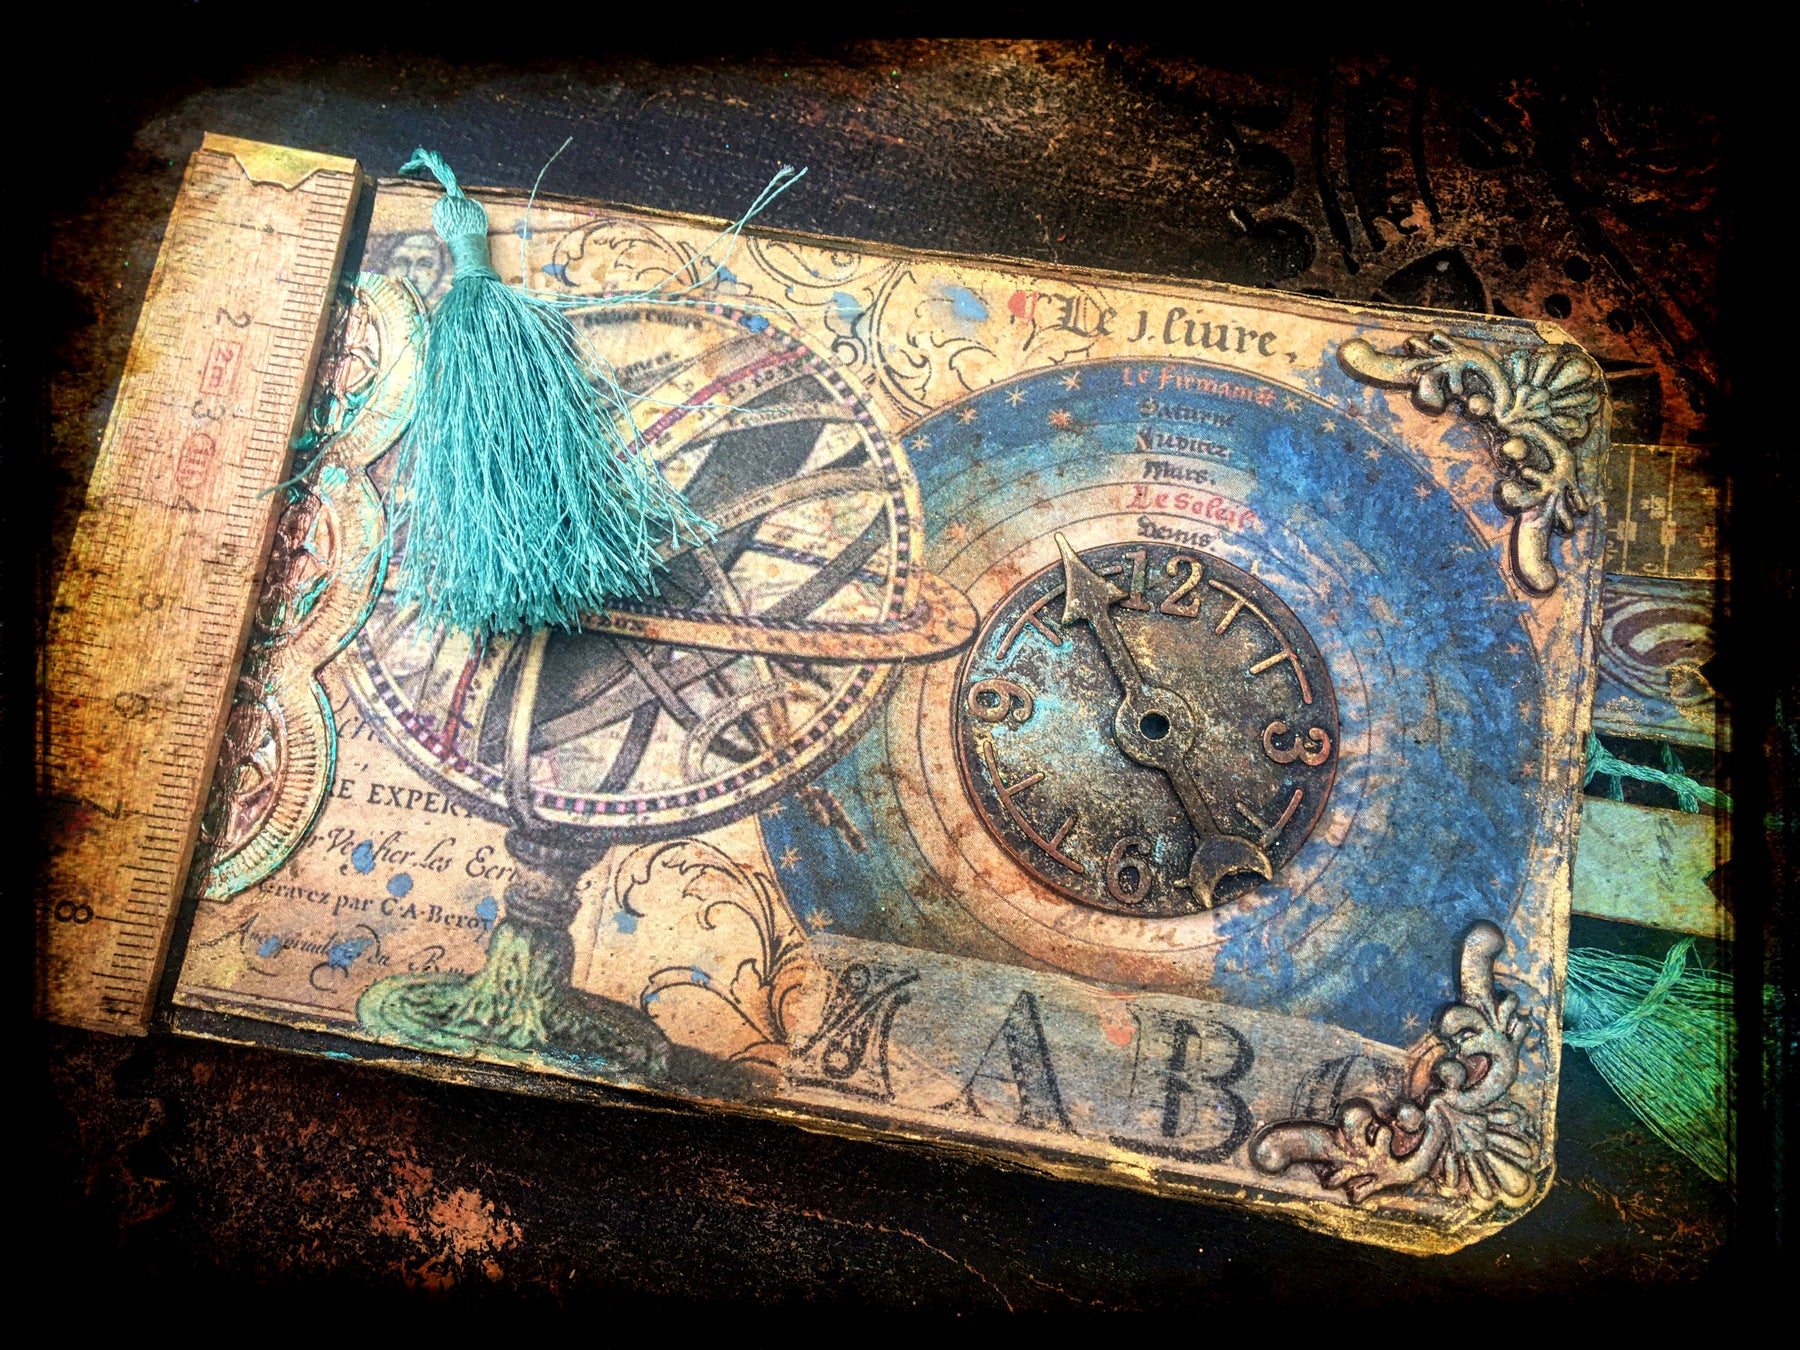 Alchemy: Mini tag book by LOUISE CROSBIE